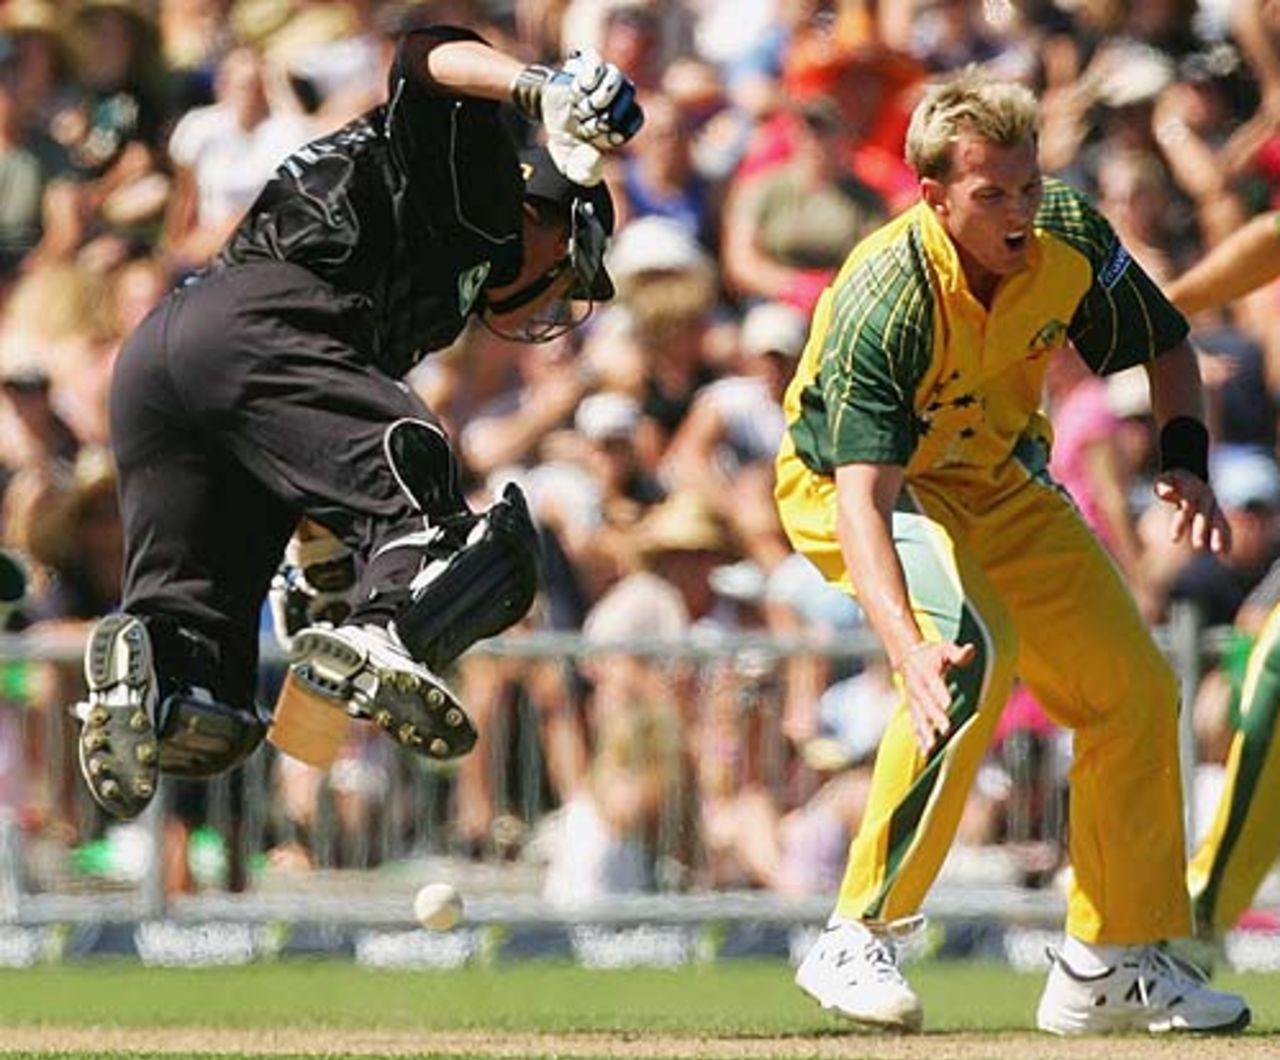 Craig Cumming collides with Brett Lee, New Zealand v Australia, 5th ODI, Napier